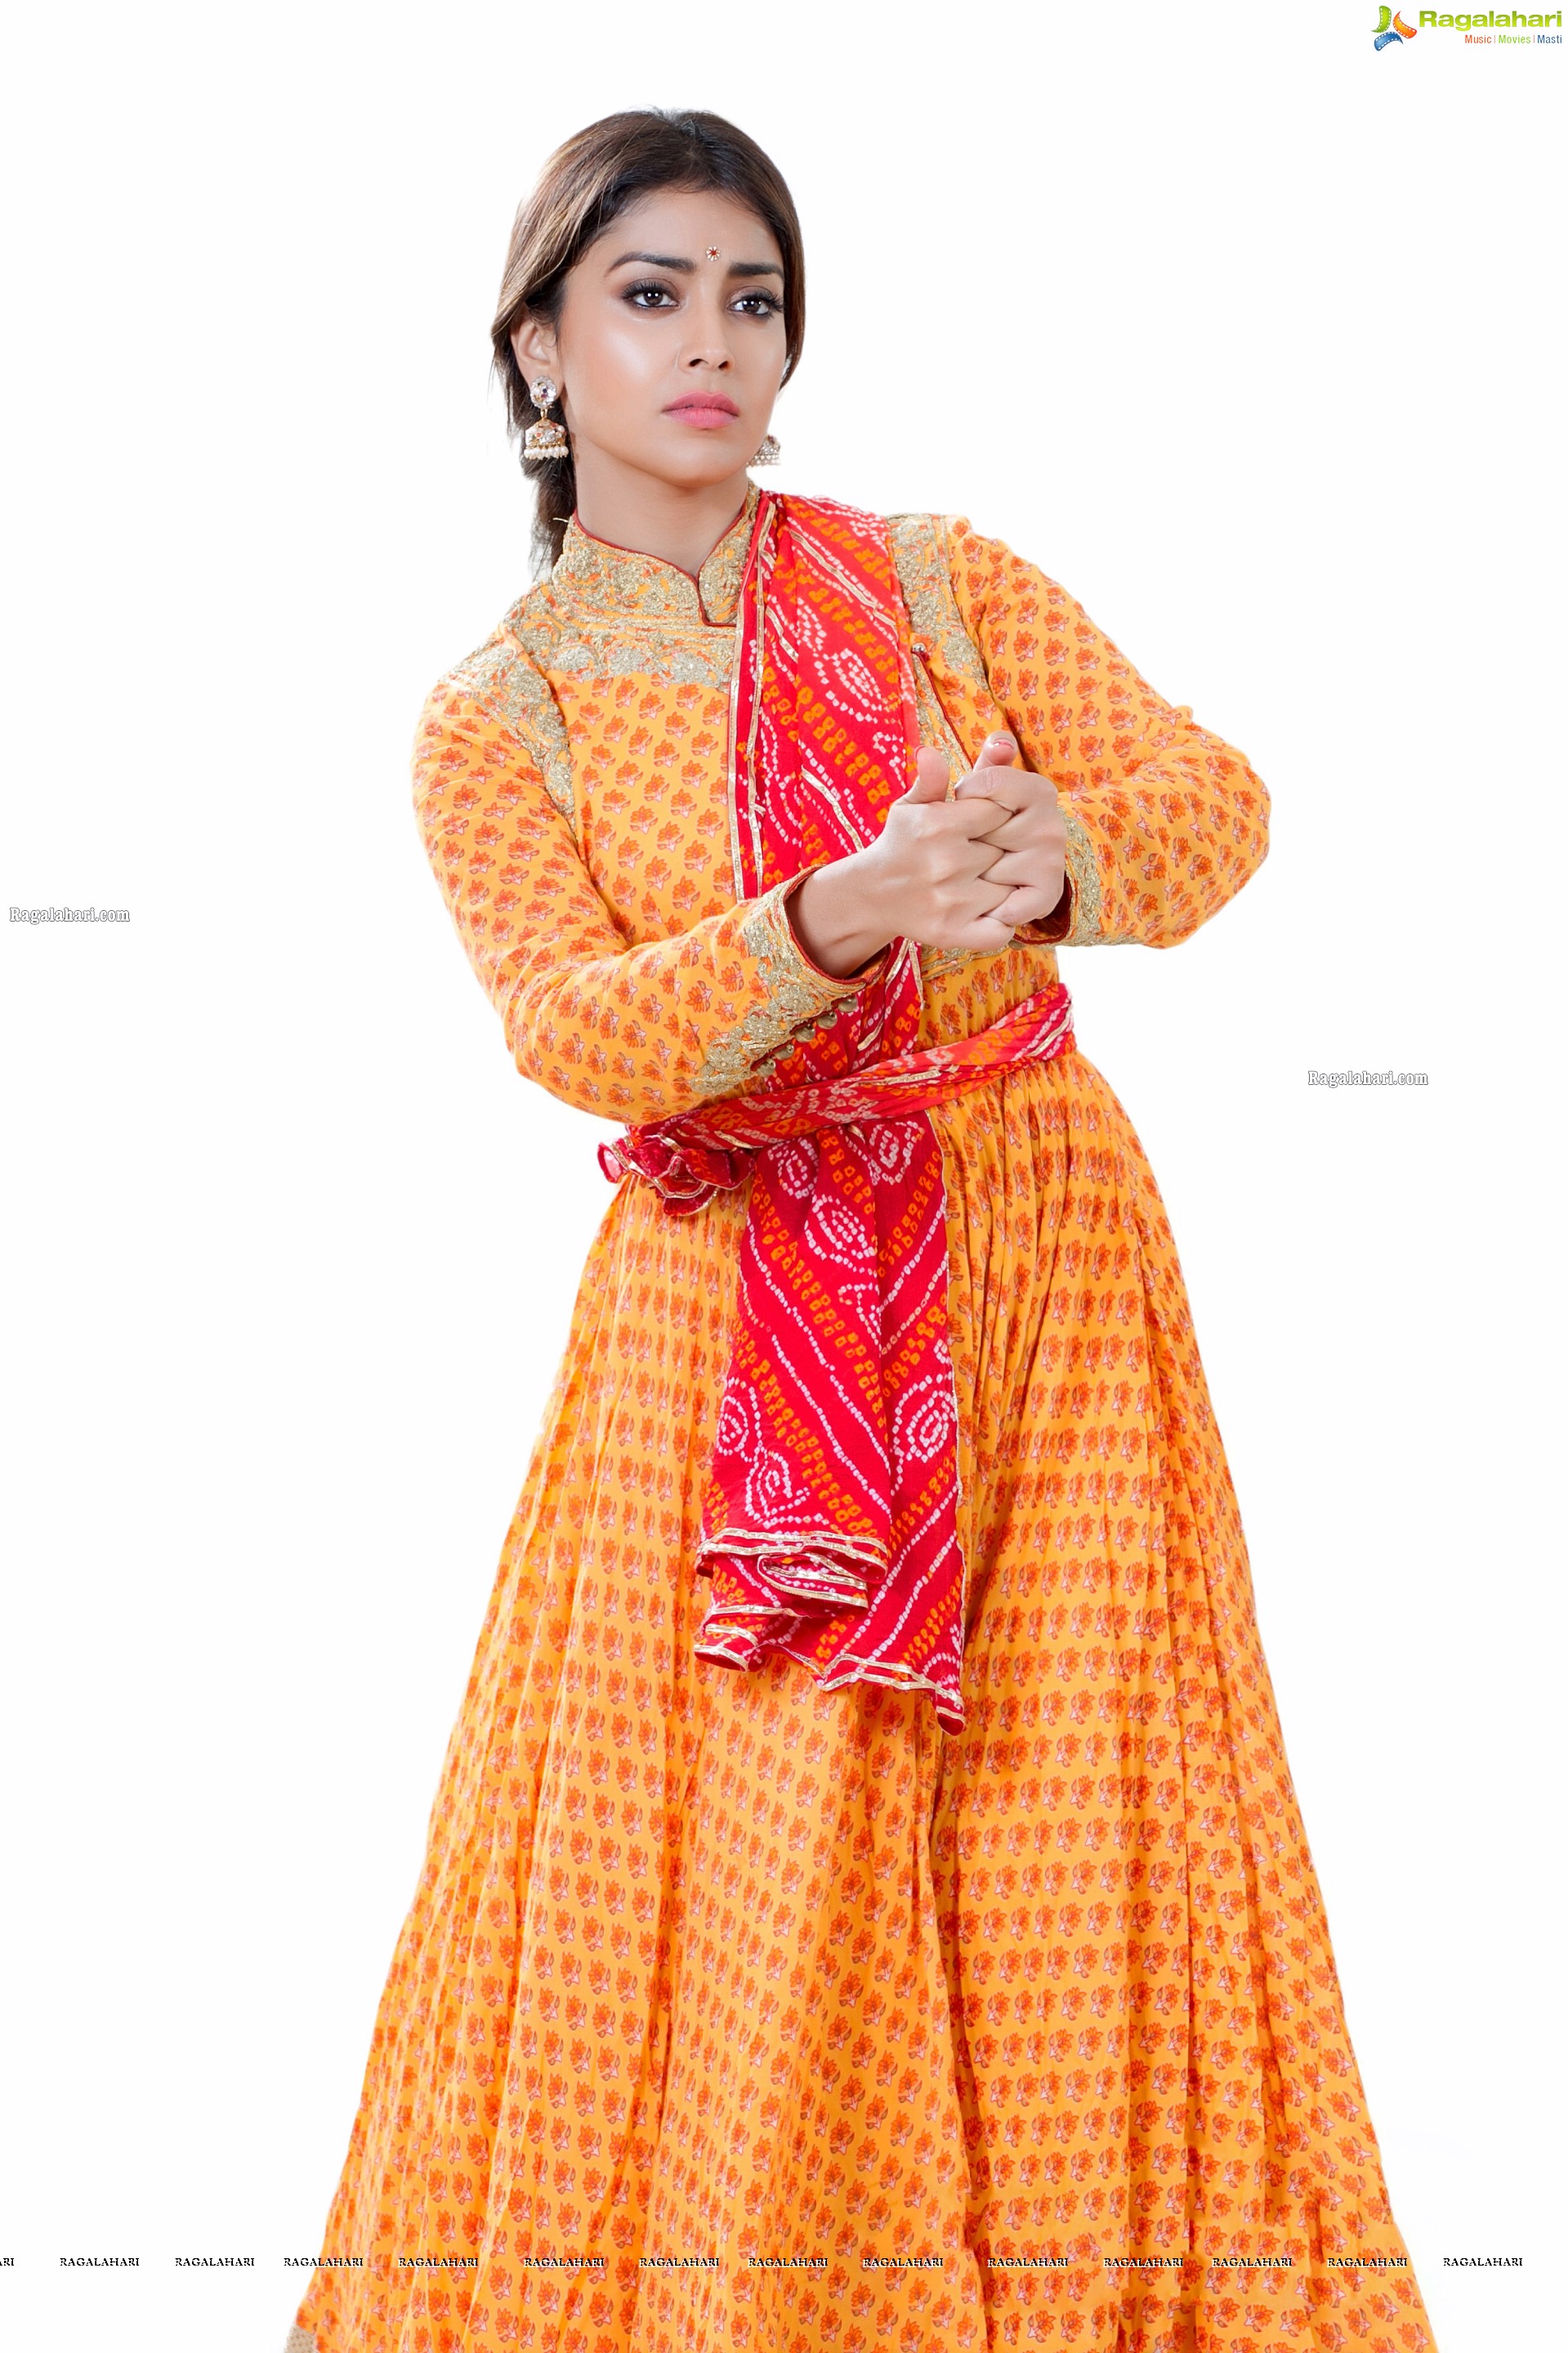 Shriya Saran in Dance Poses Adorning a Yellow Churidar